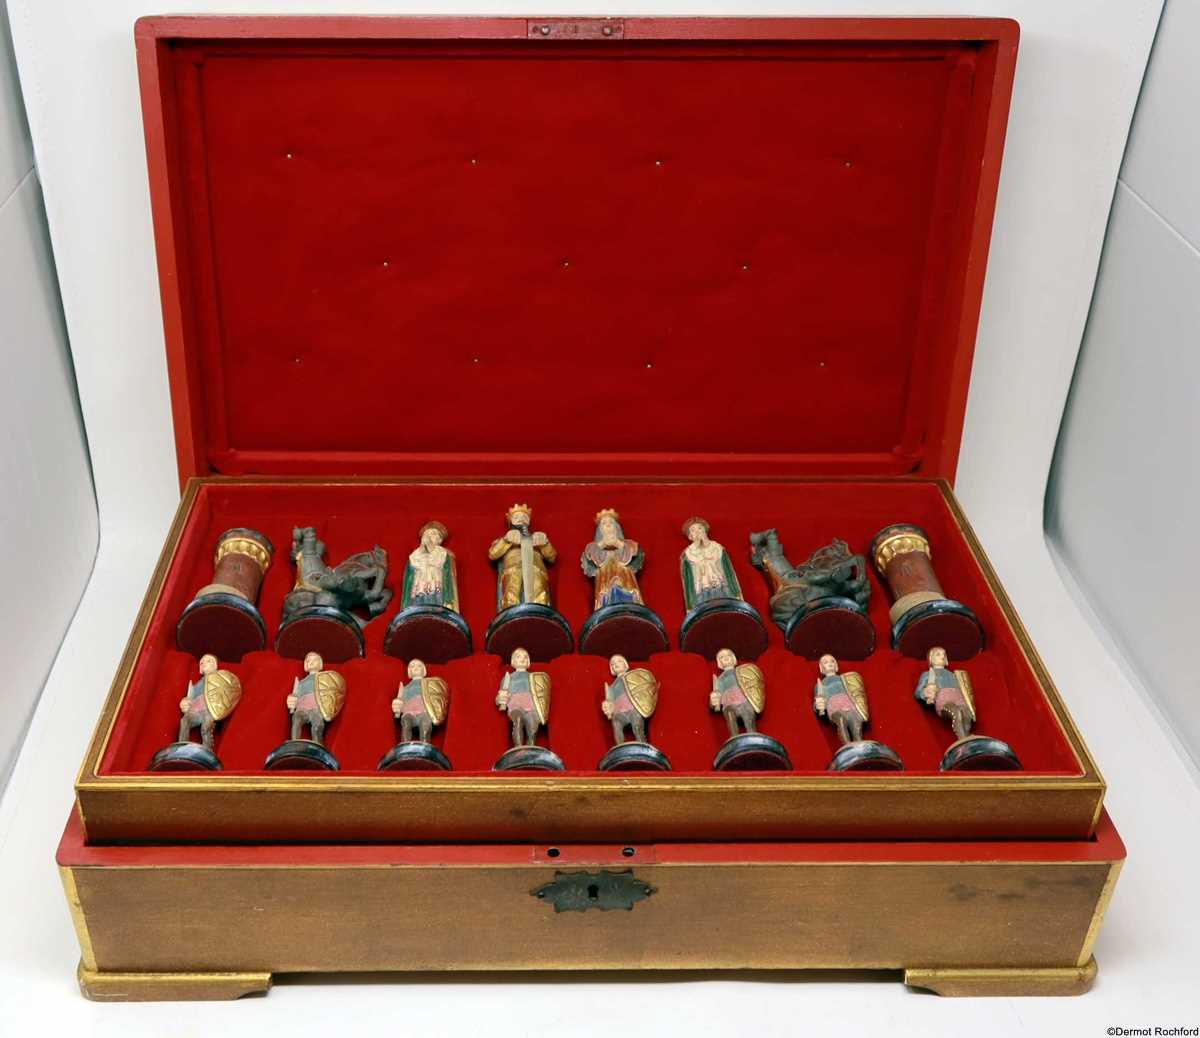 Antique Italian Bone Chess Set